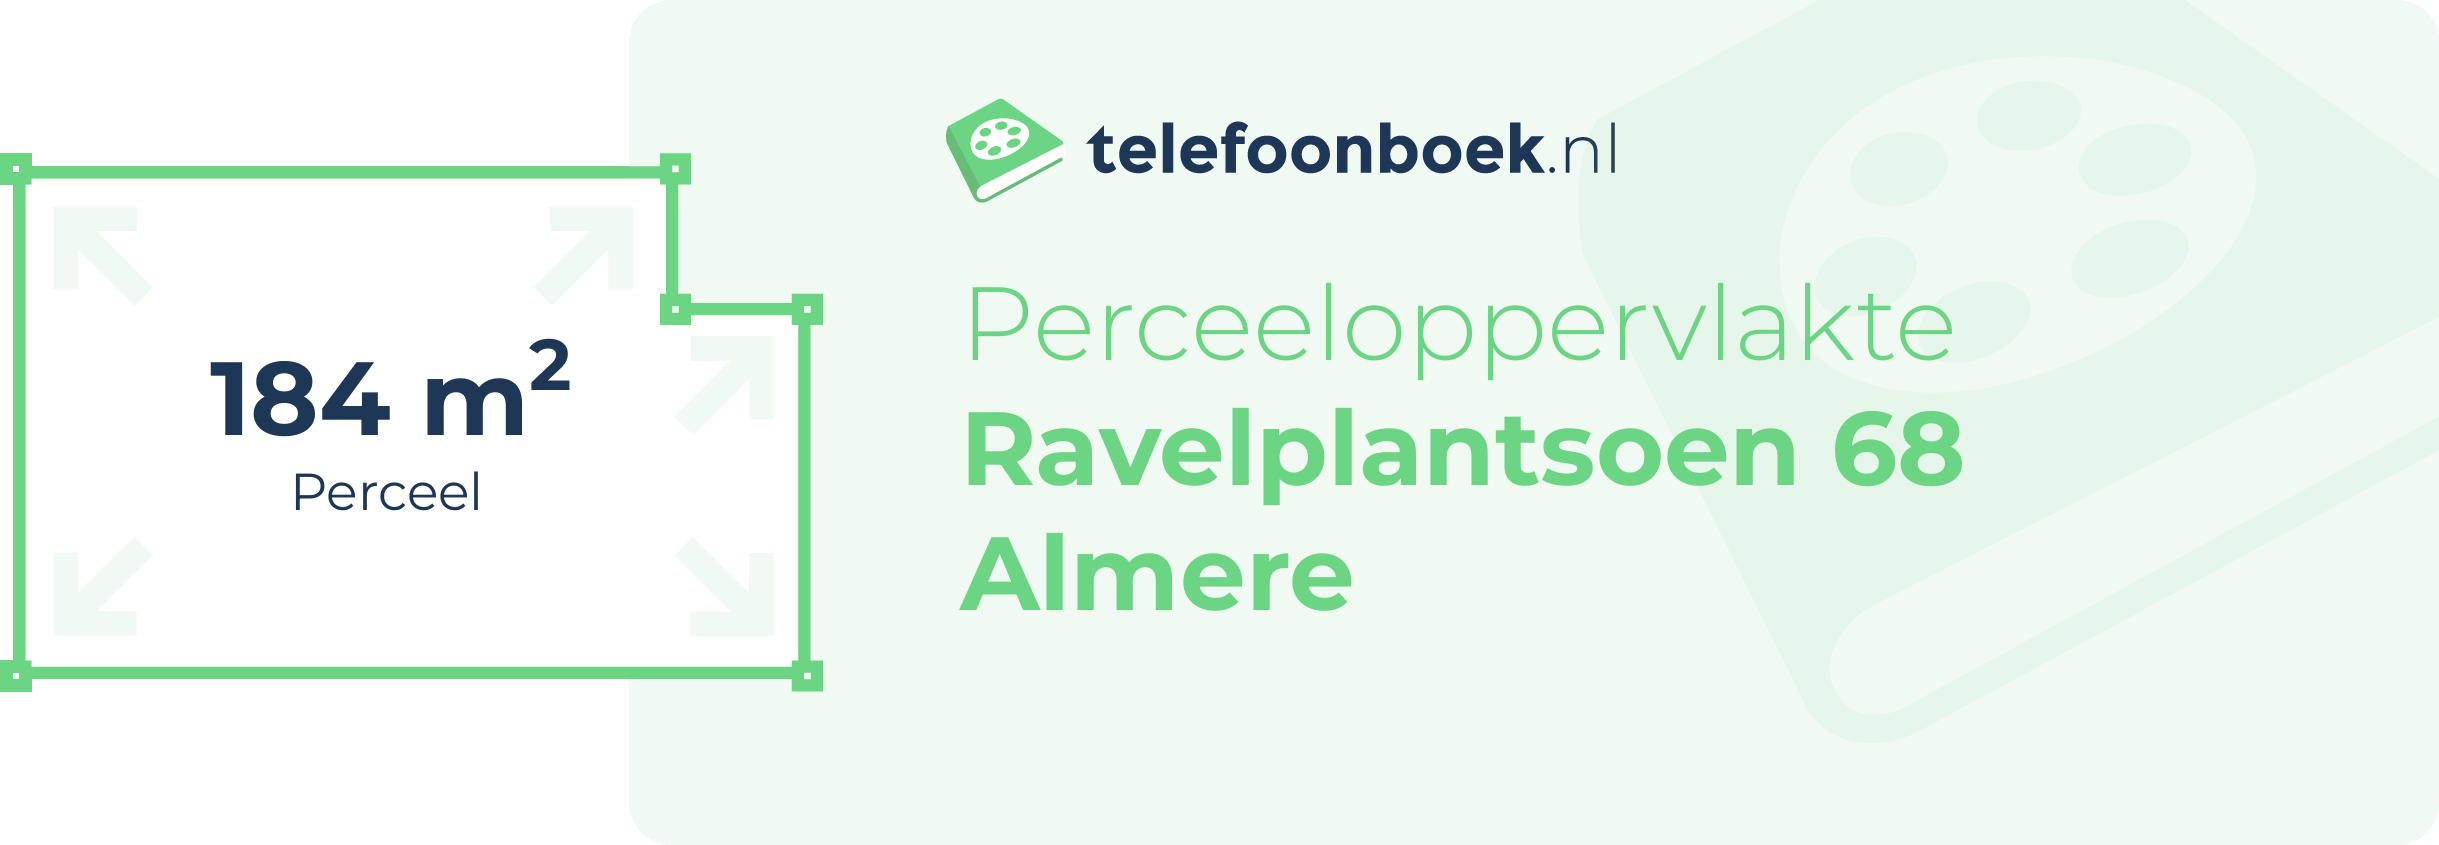 Perceeloppervlakte Ravelplantsoen 68 Almere